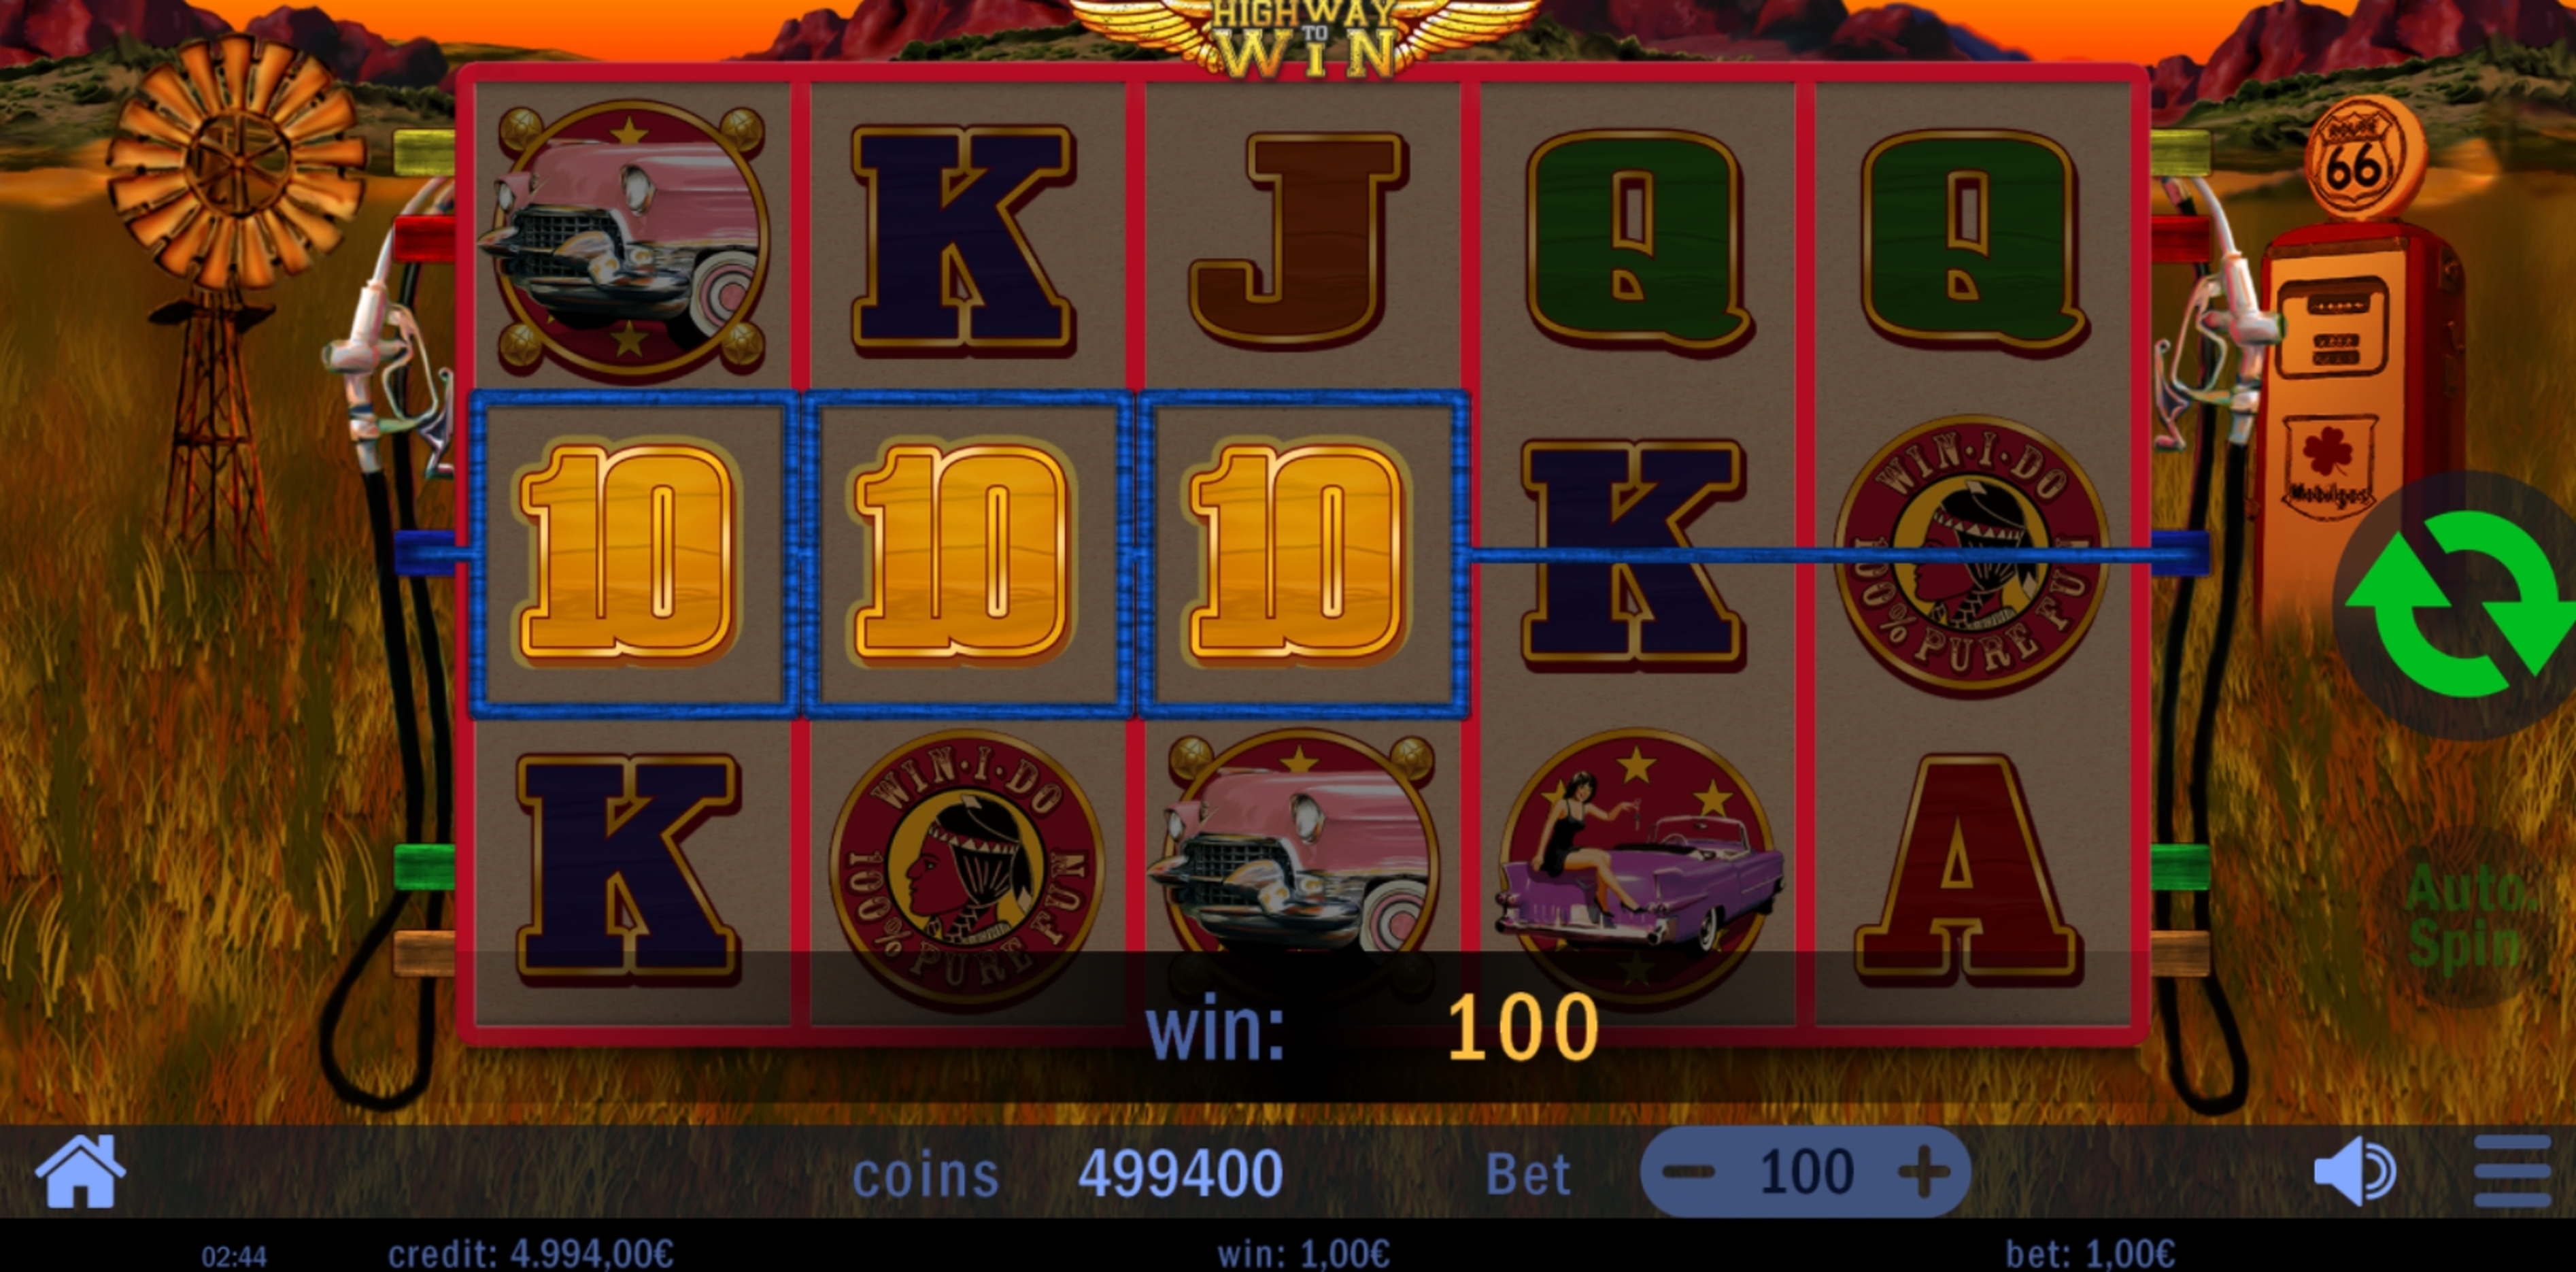 Win Money in Highway to Win Free Slot Game by Swintt